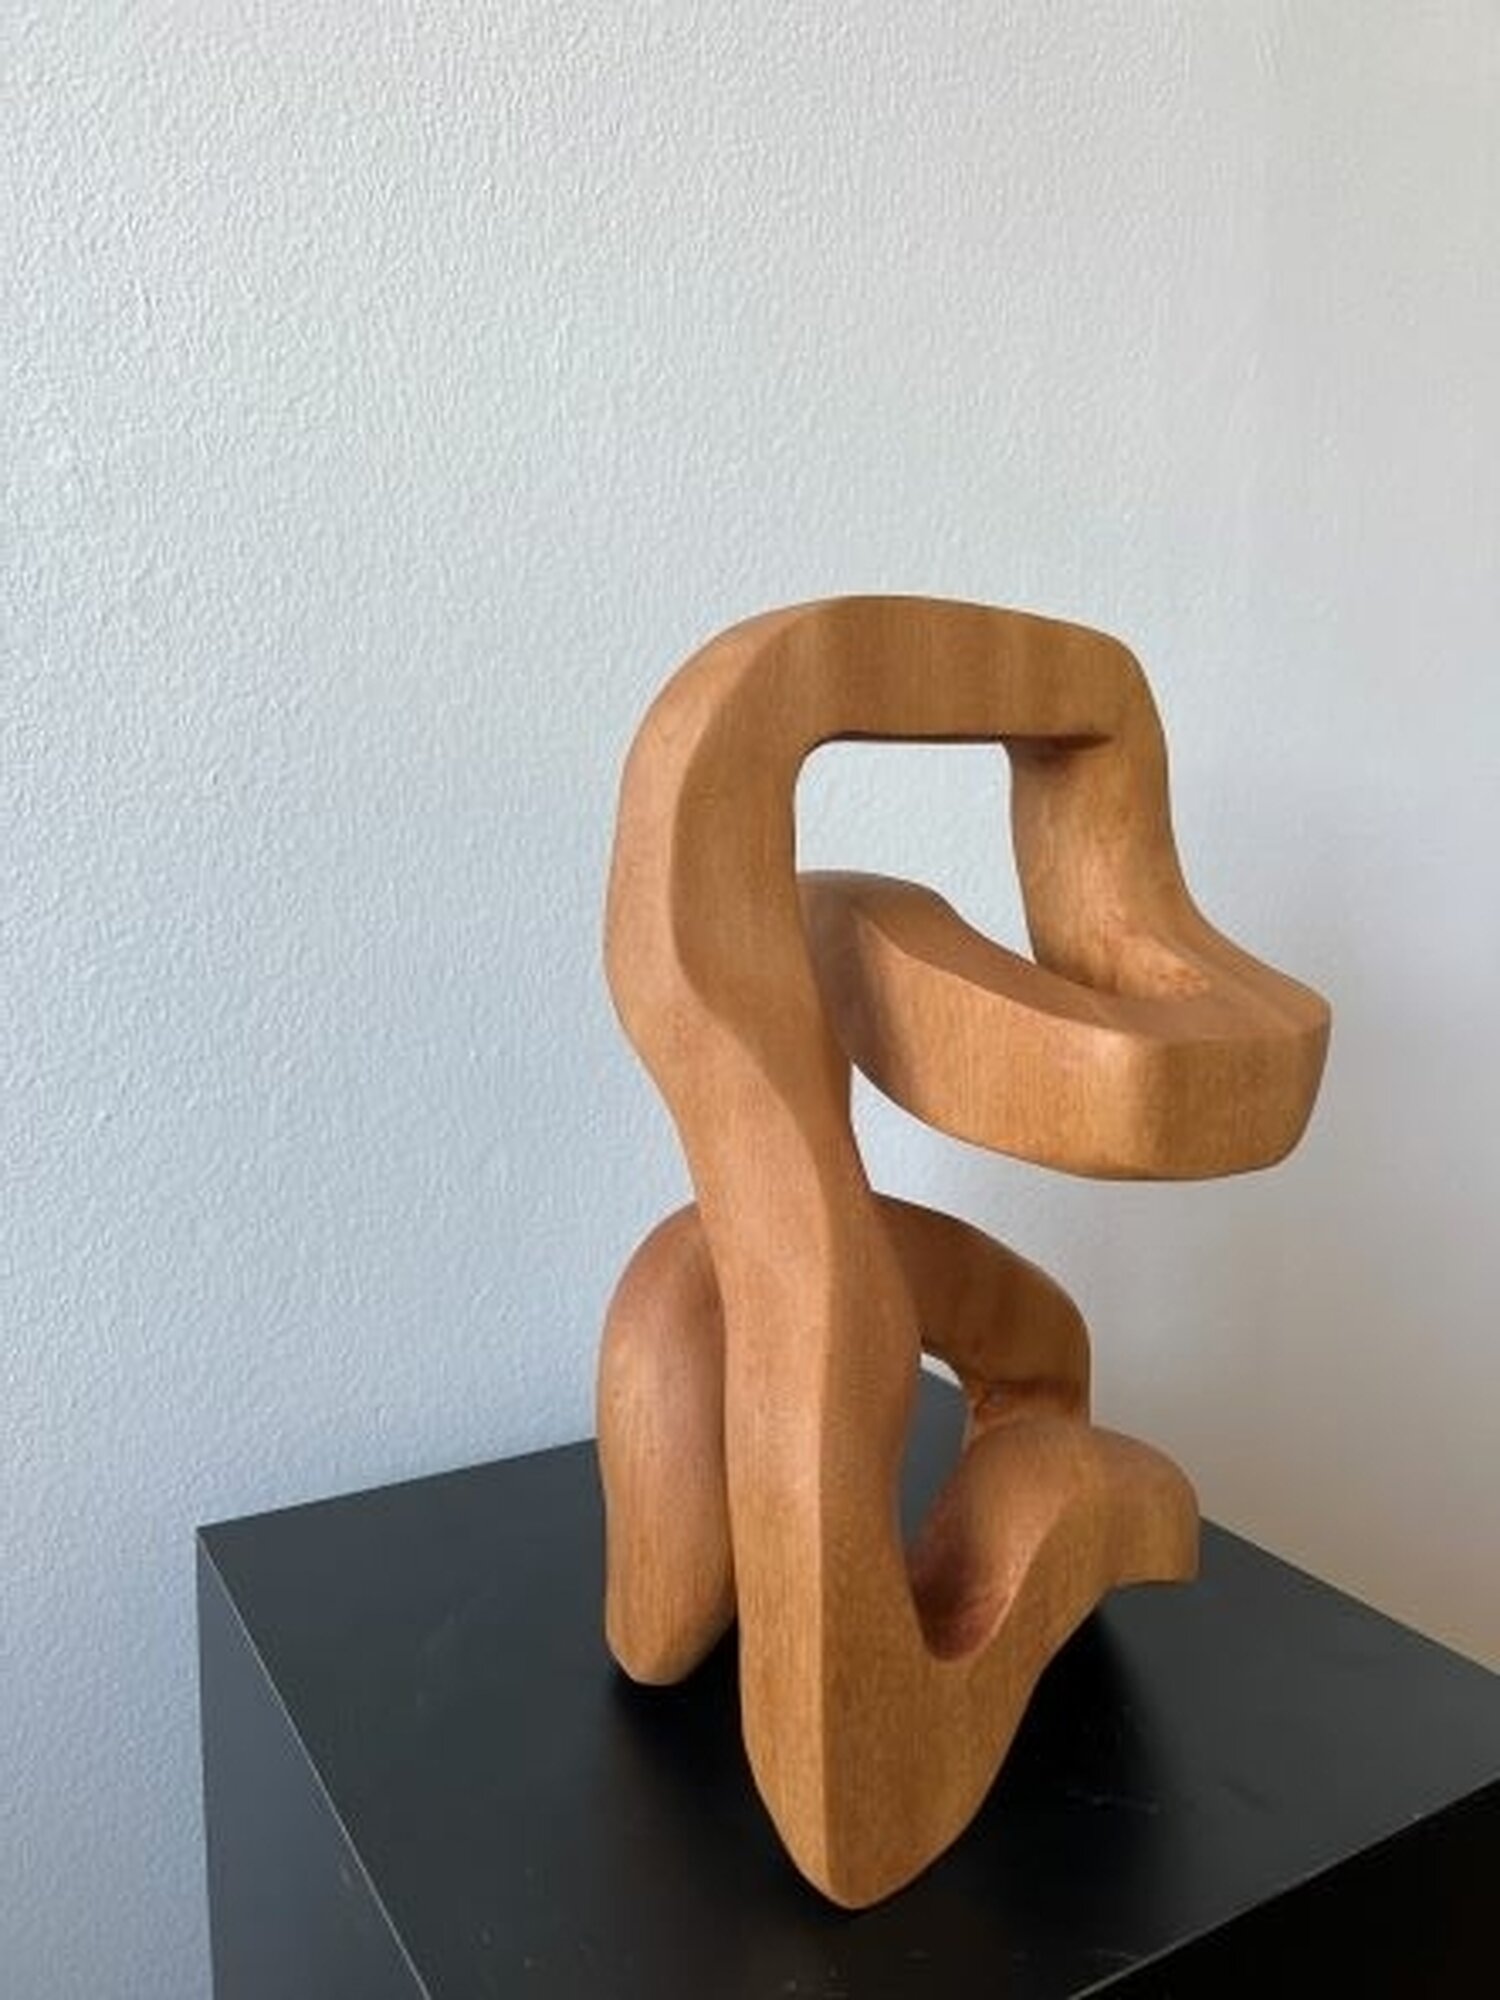 Free form sculpture